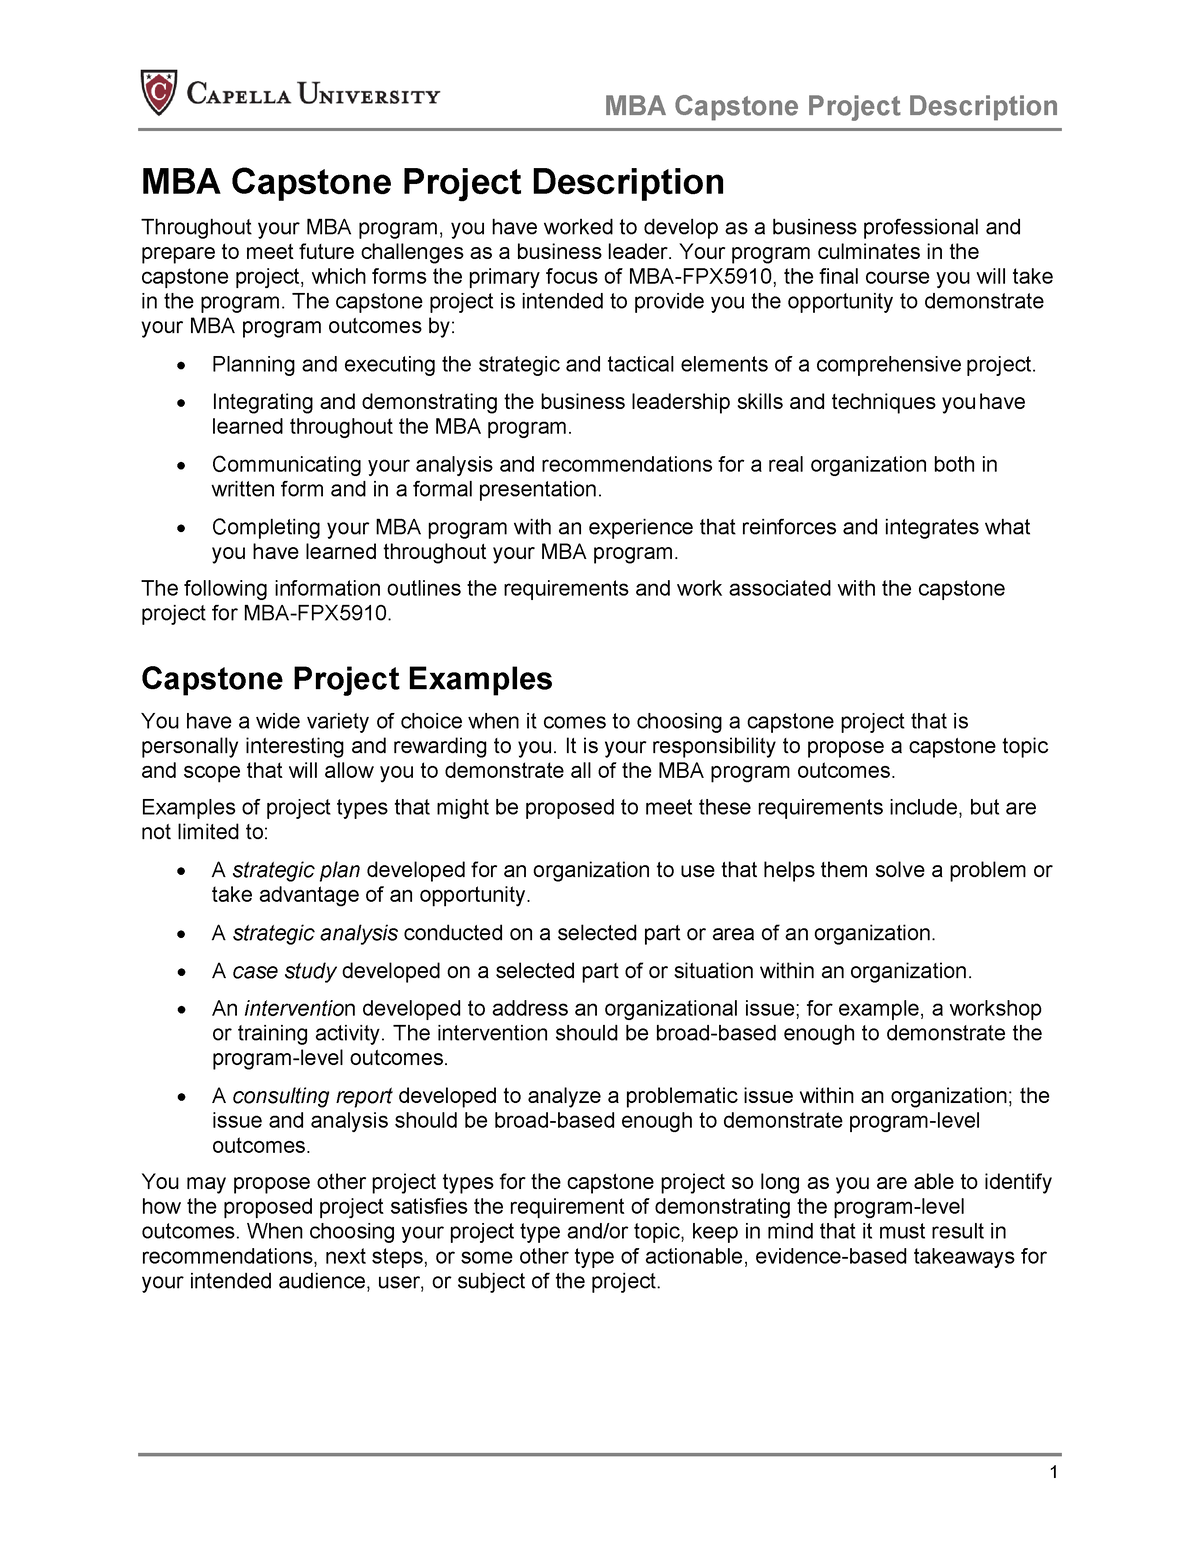 capstone project pdf